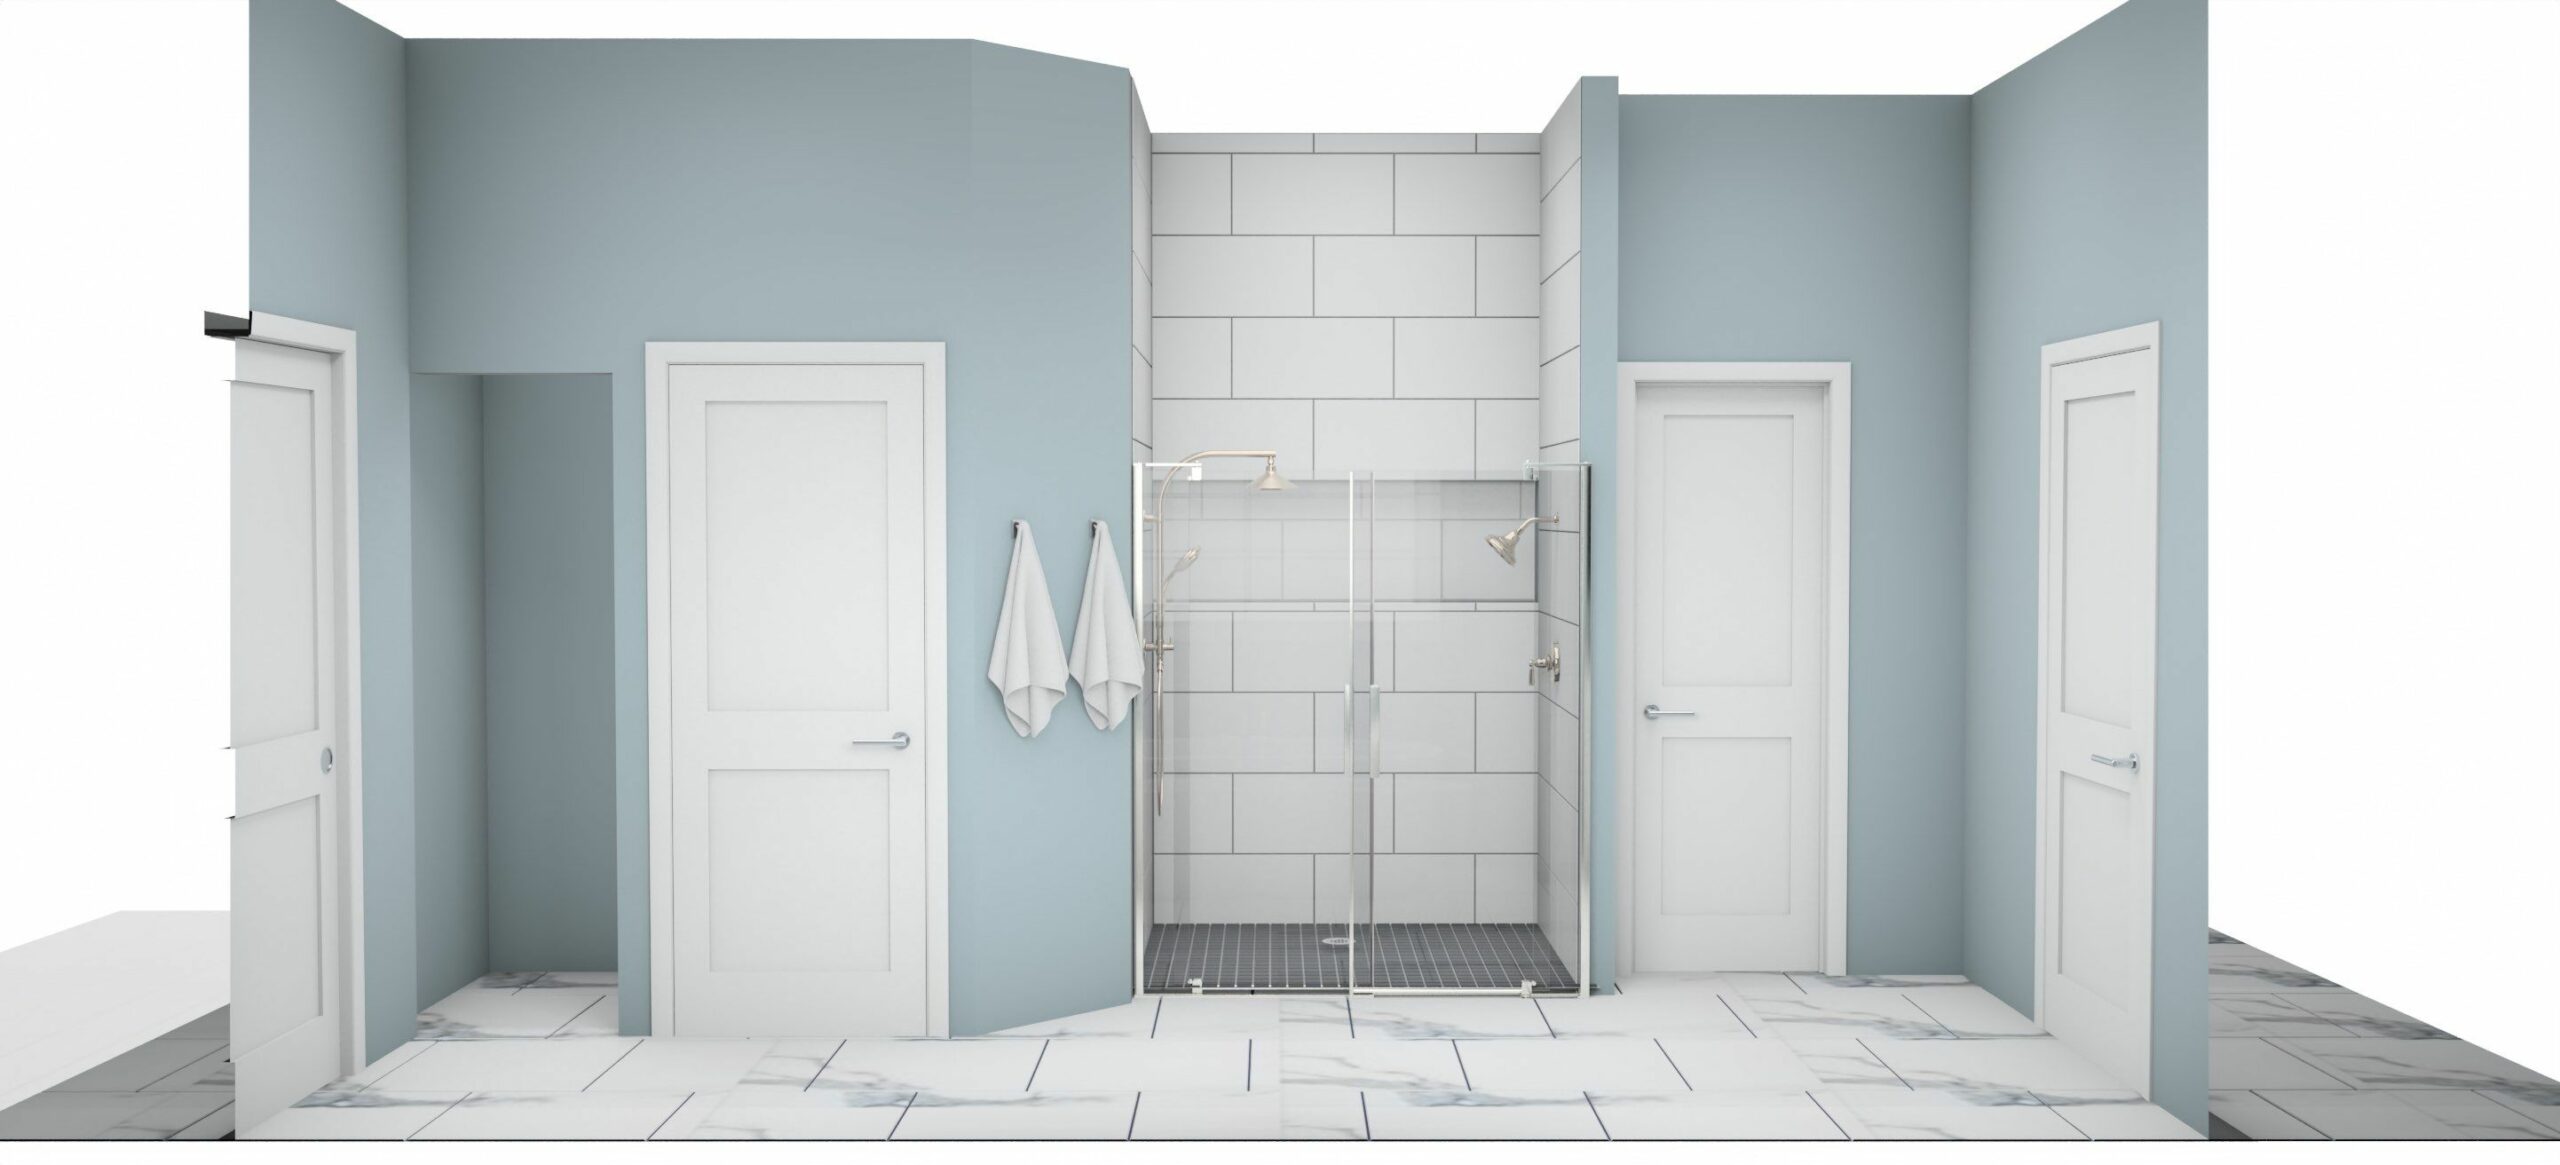 brecksville bathroom remodel 2 scaled - Keselman Construction Group Inc